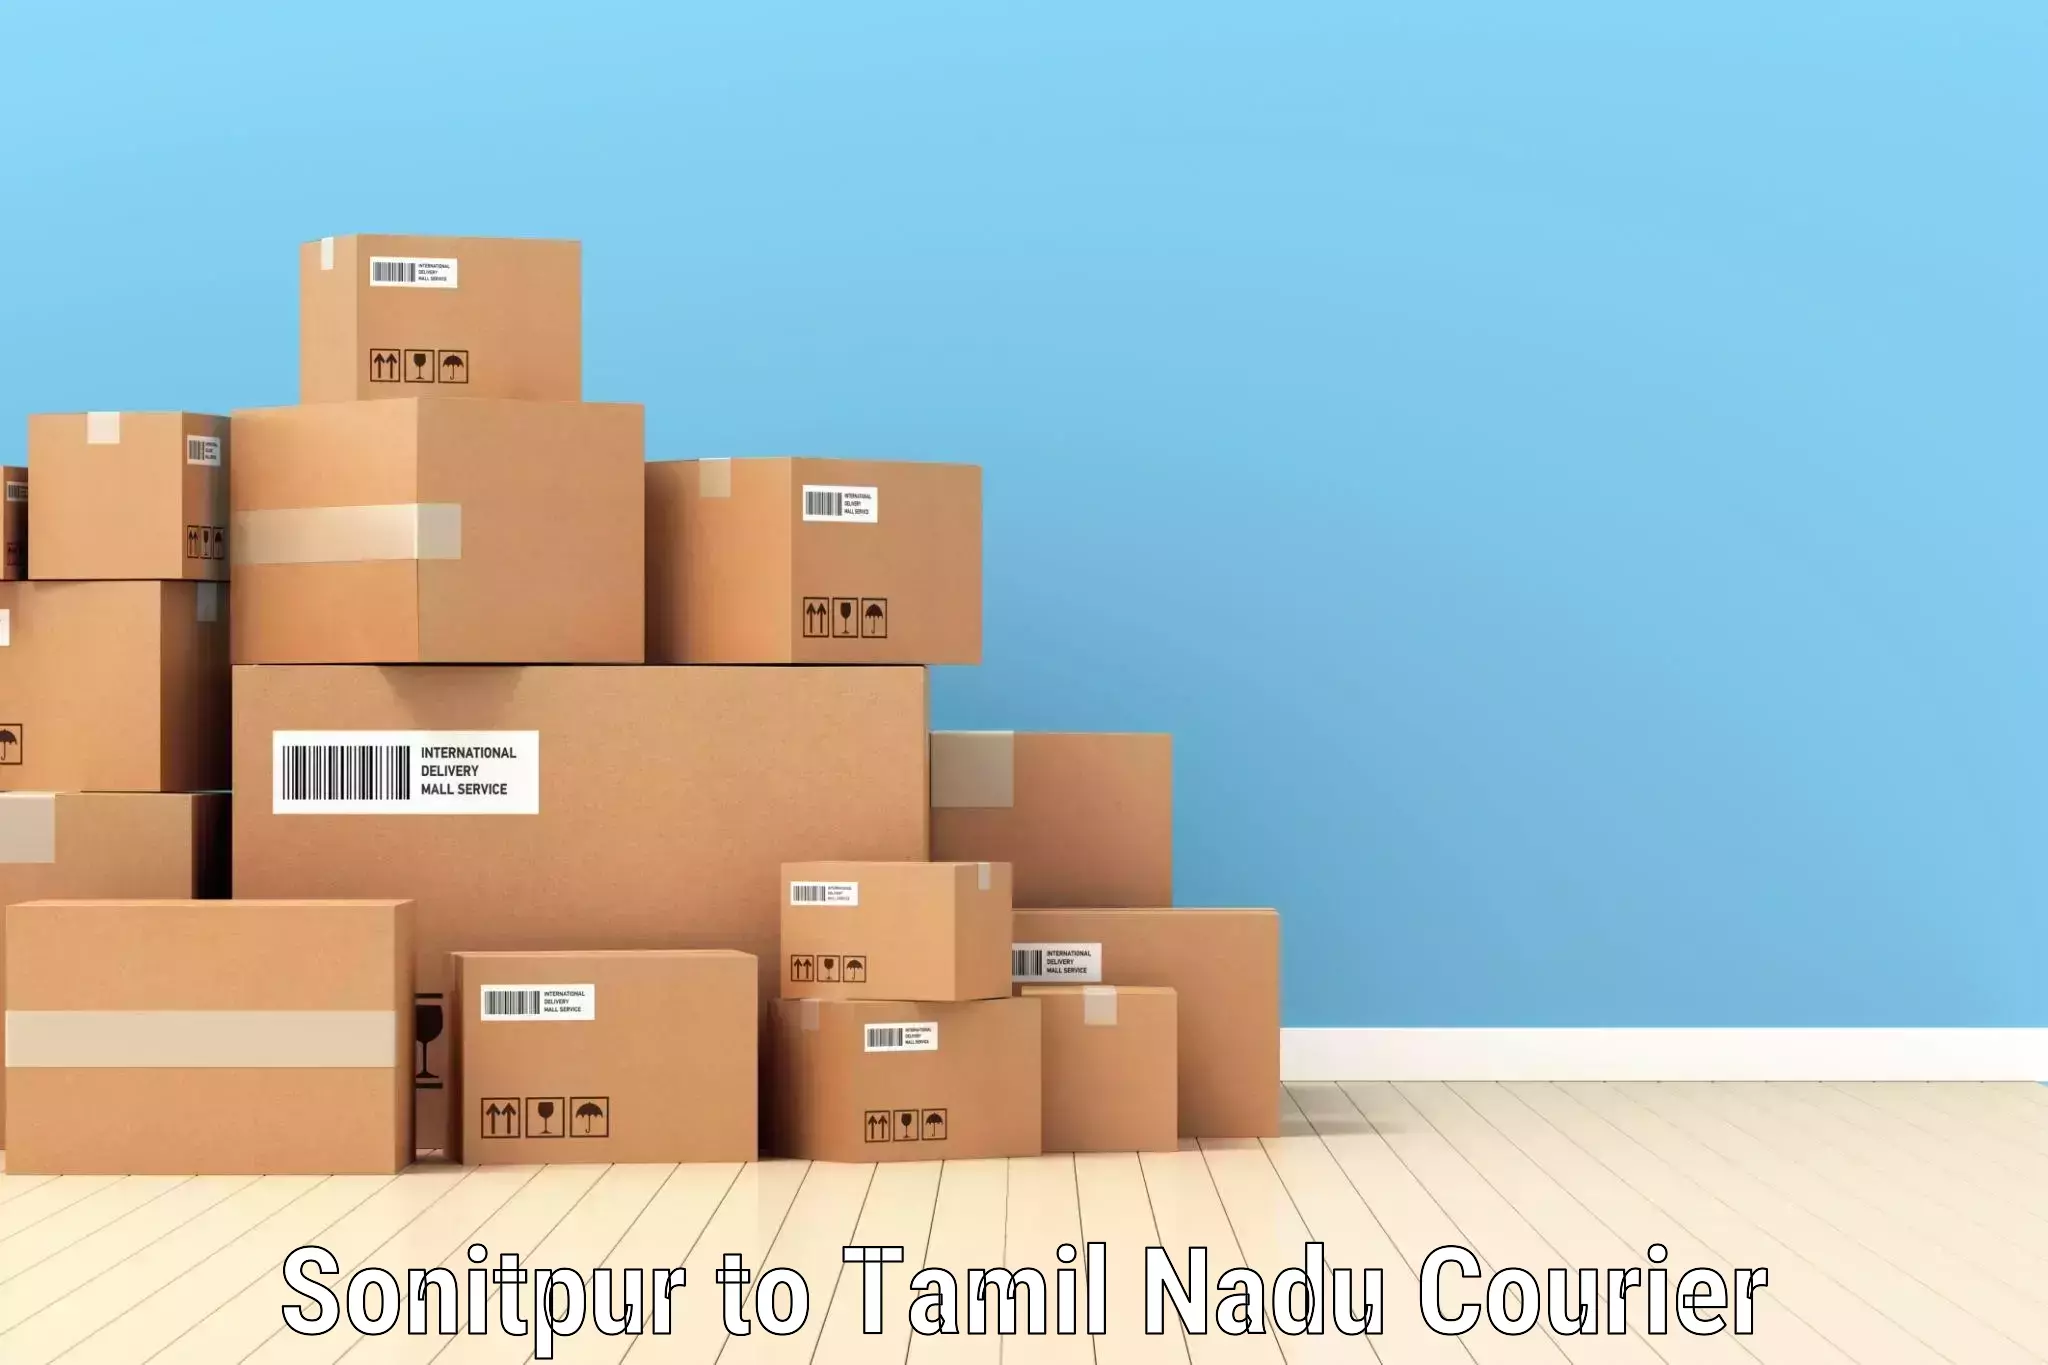 Enhanced shipping experience Sonitpur to Chennai